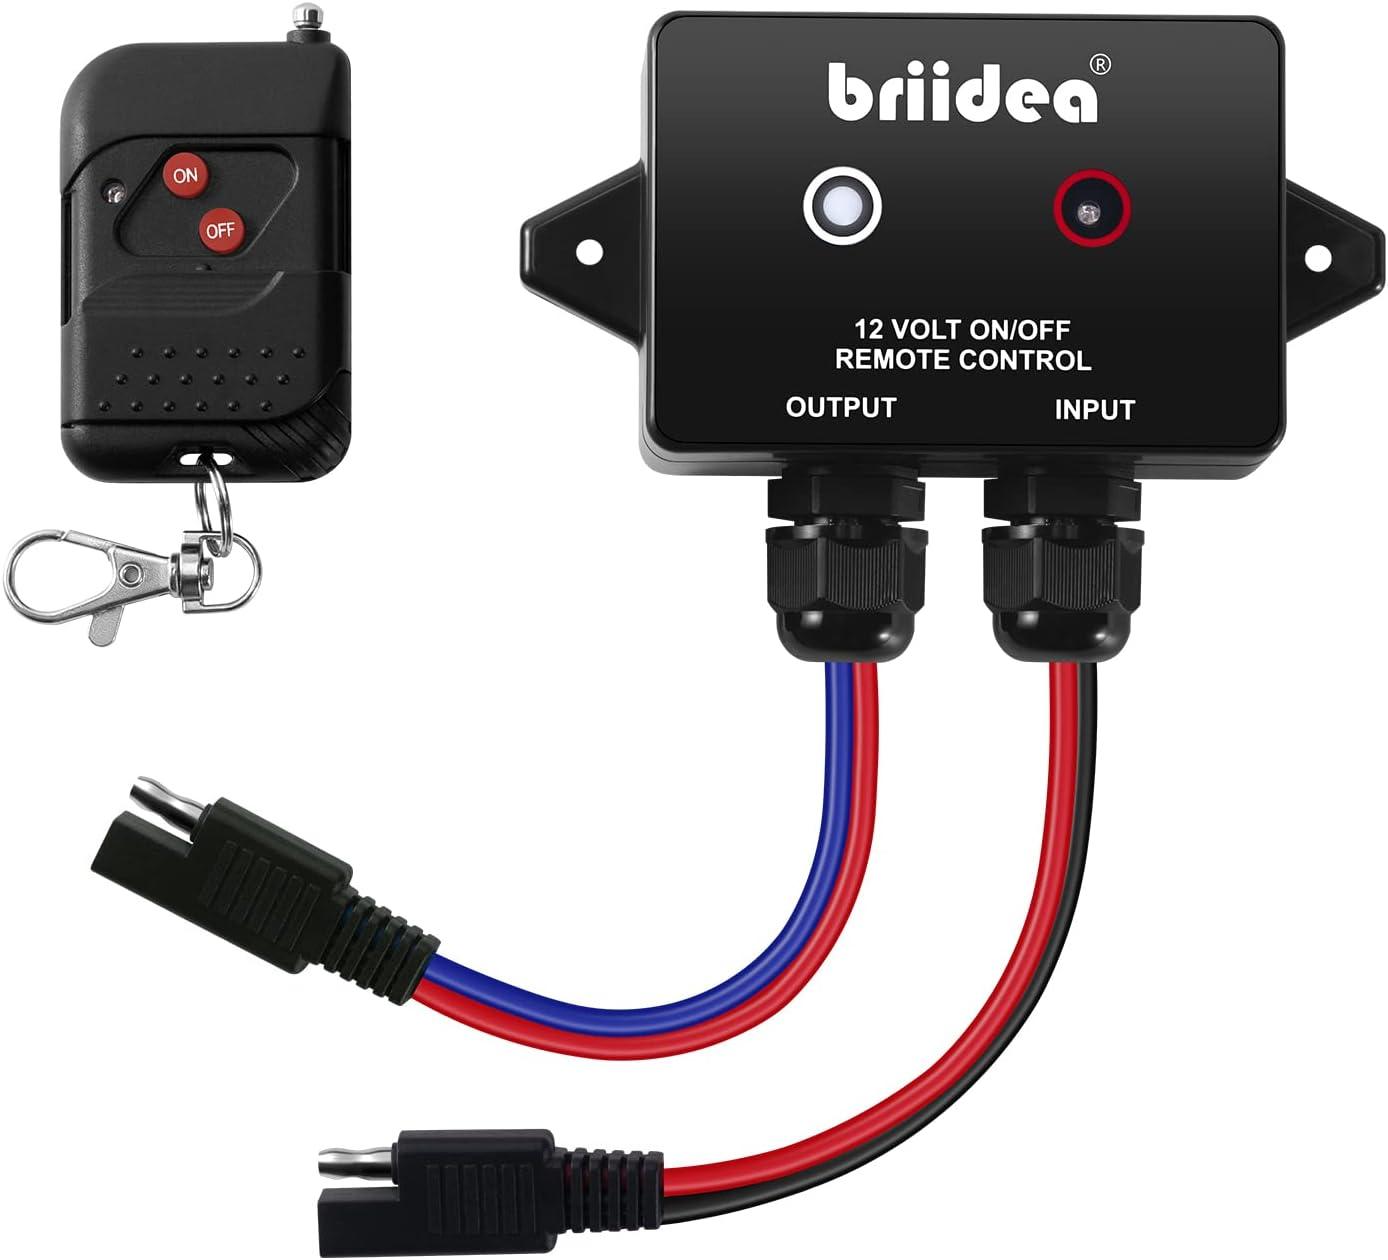 Briidea 12 Volt Wireless Remote Control Switch for Agricultural Sprayers, Spray Pumps, IP67 Waterproof - briidea